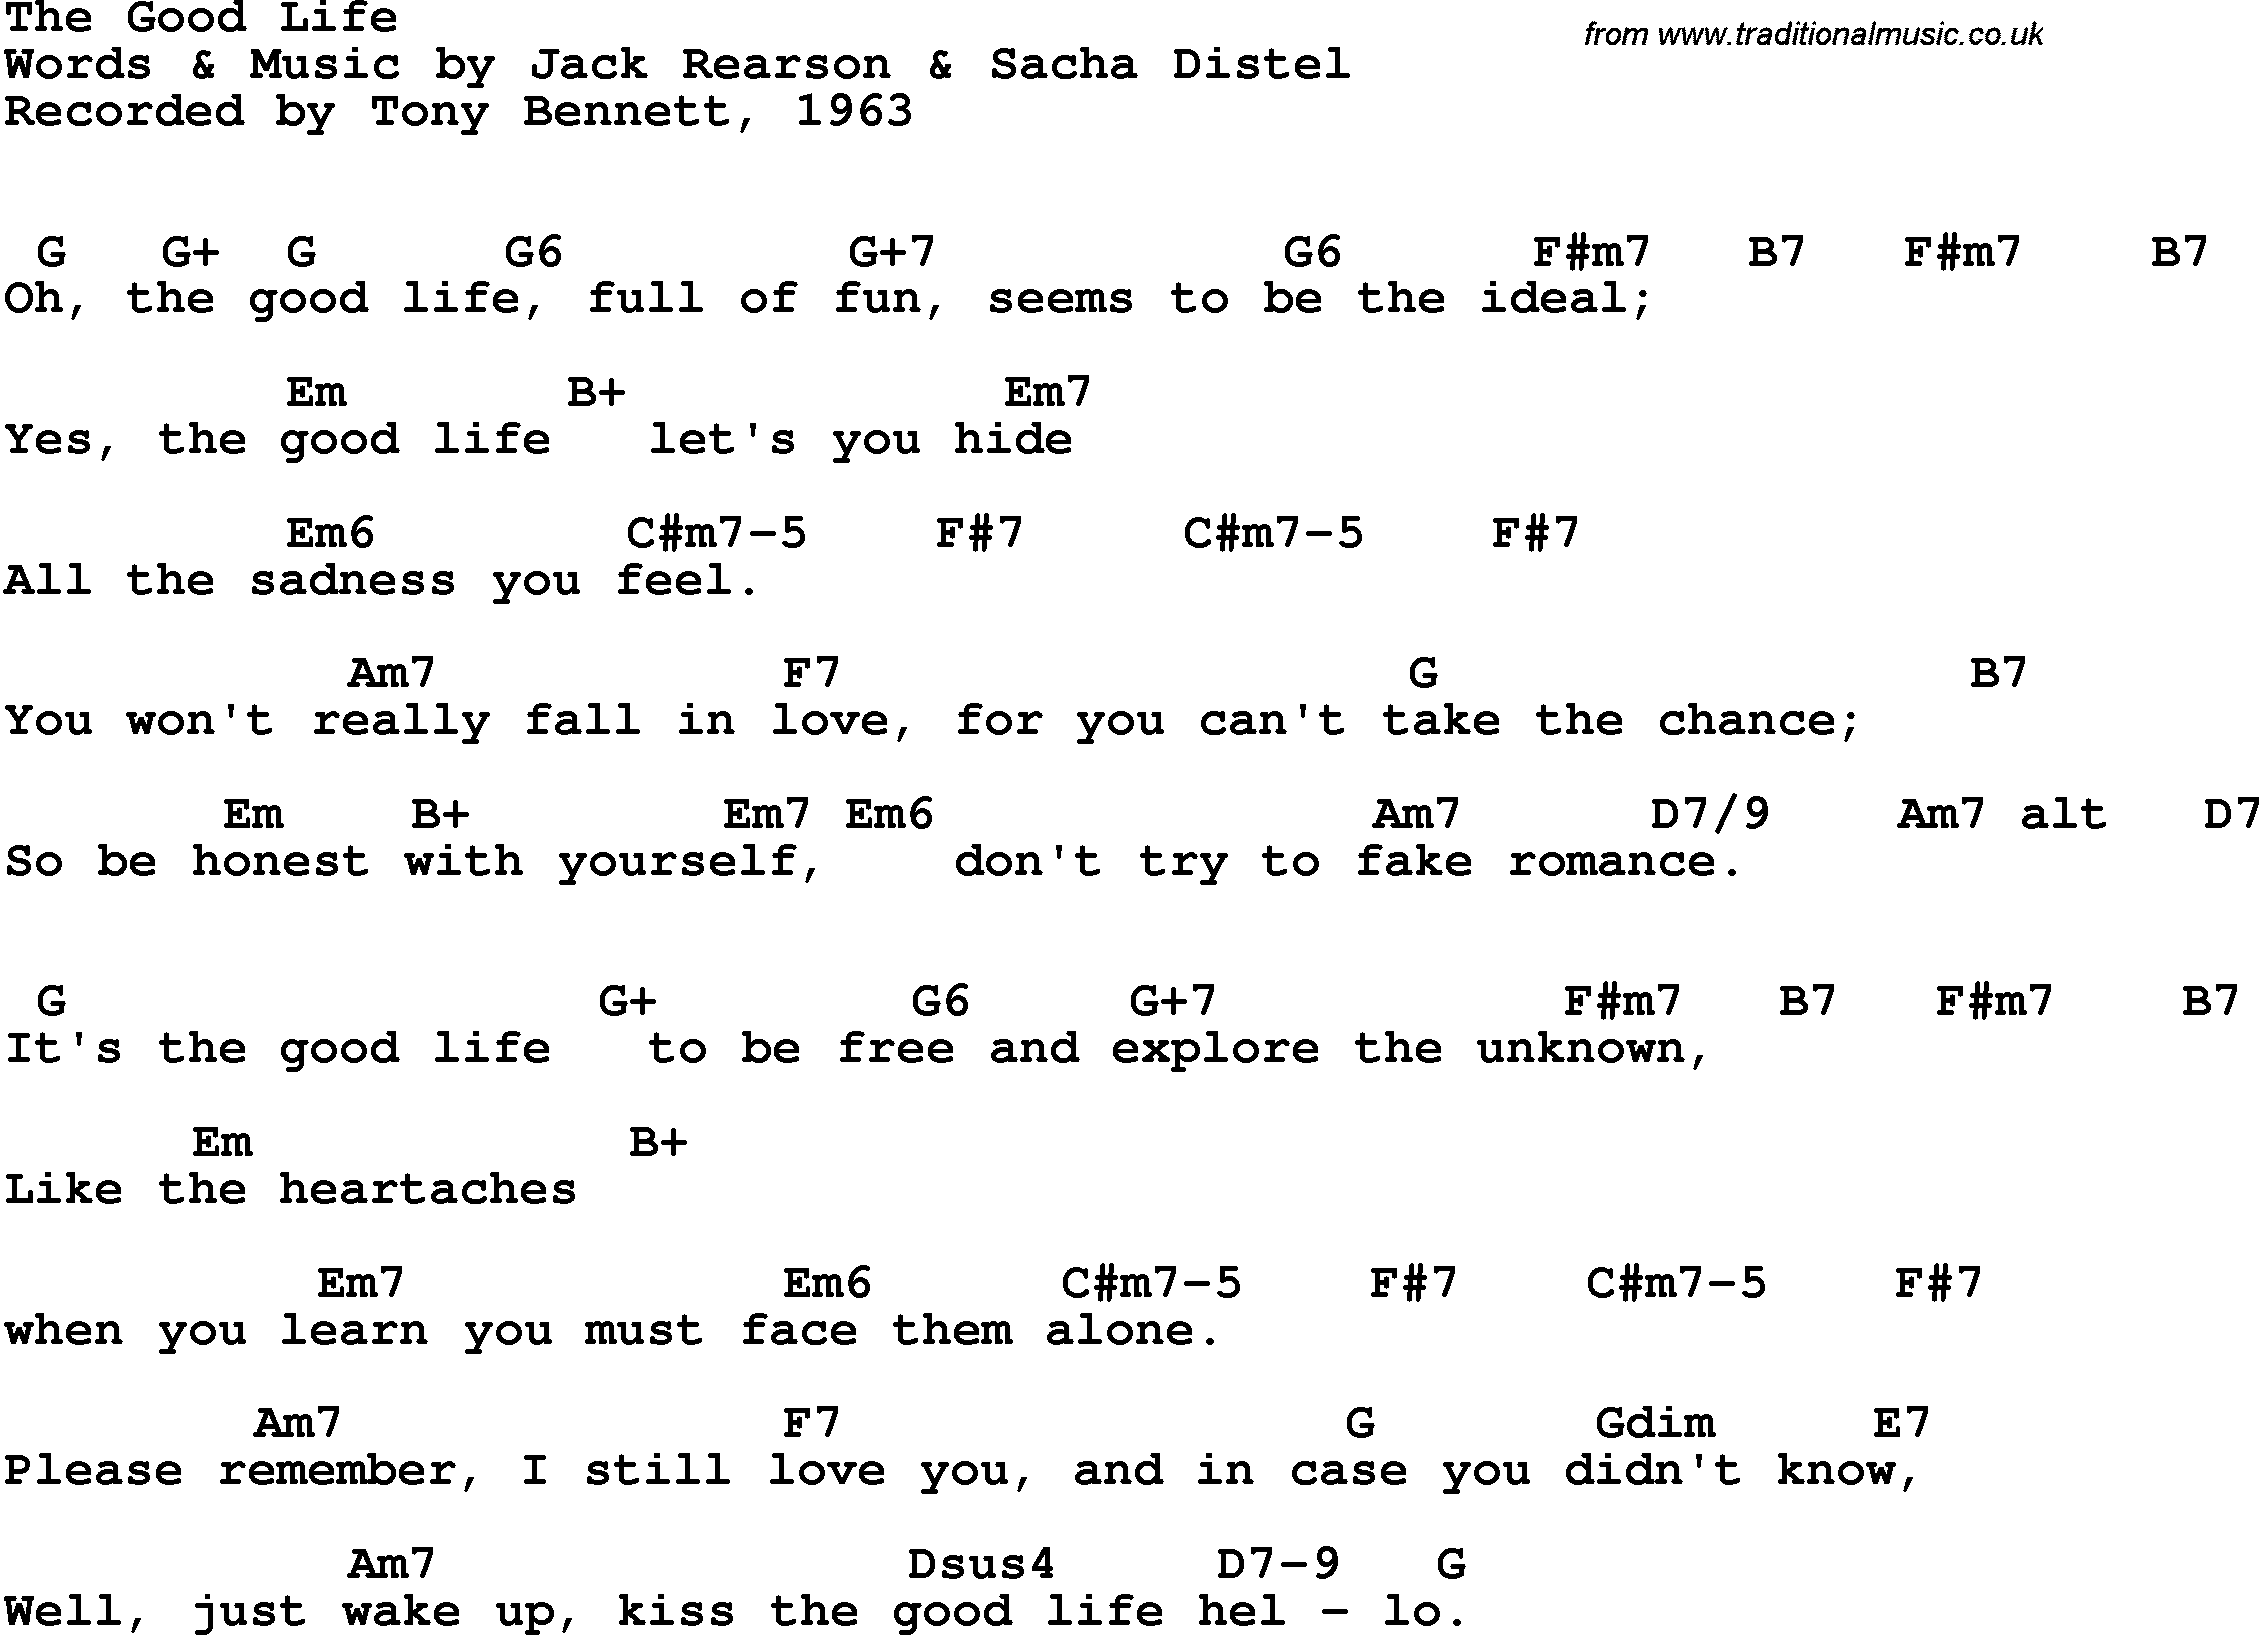 Song Lyrics with guitar chords for Good Life, The - Tony Bennett, 1963